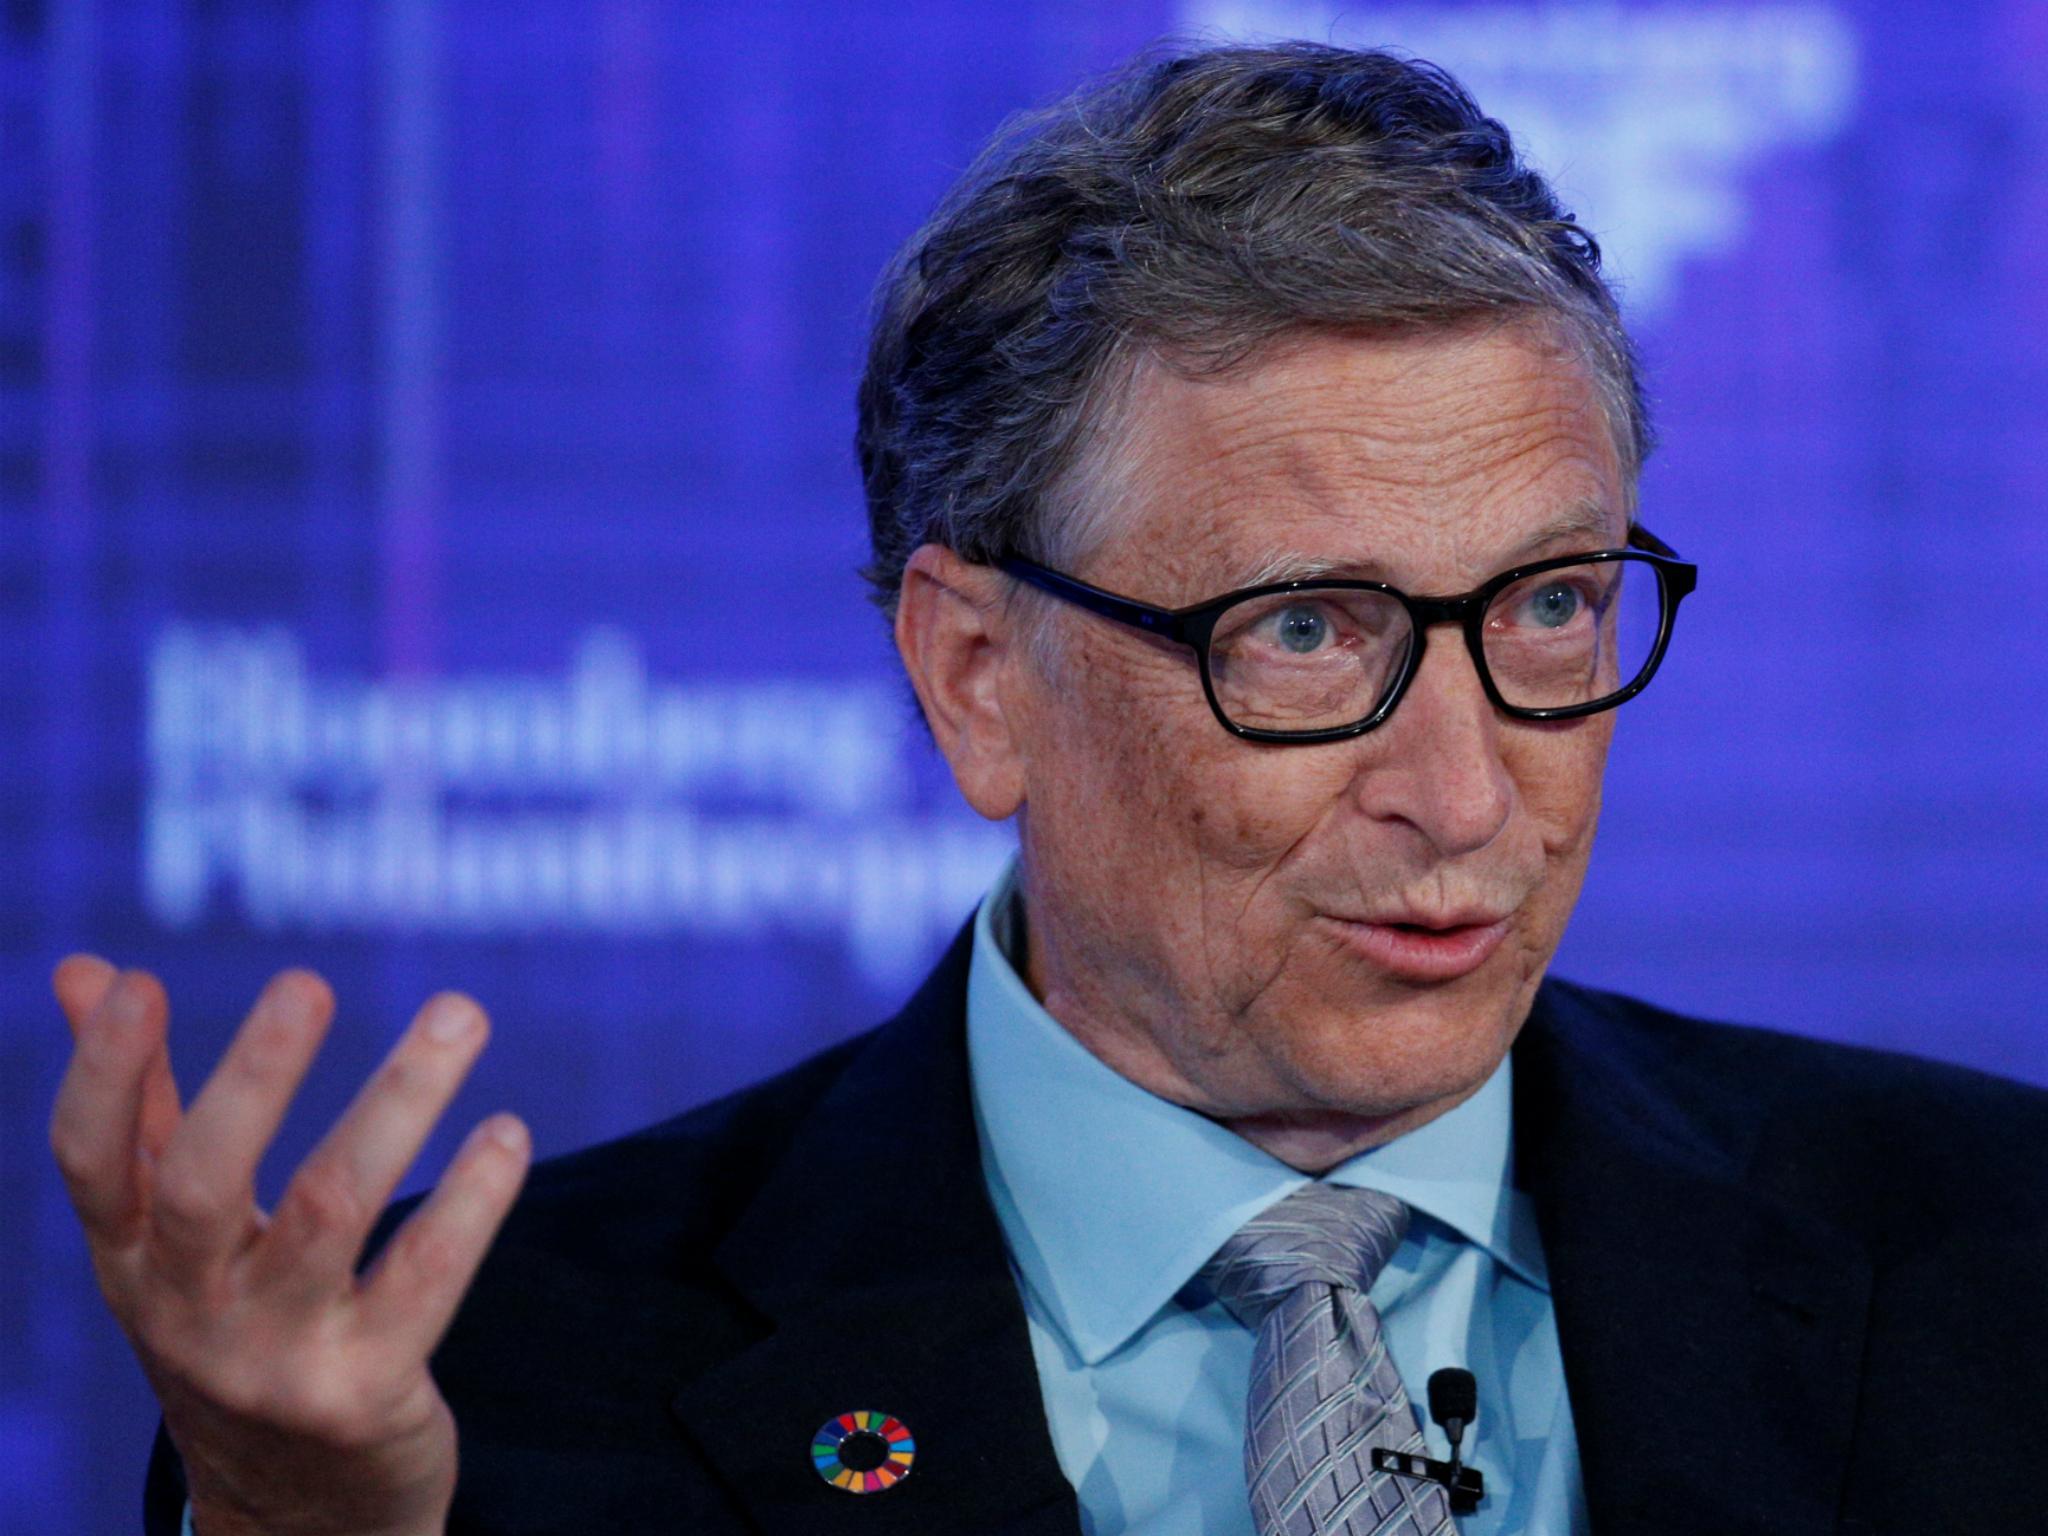 Microsoft co-founder Bill Gates, speaks at the Bloomberg Global Business Forum in New York City, U.S., September 20, 2017